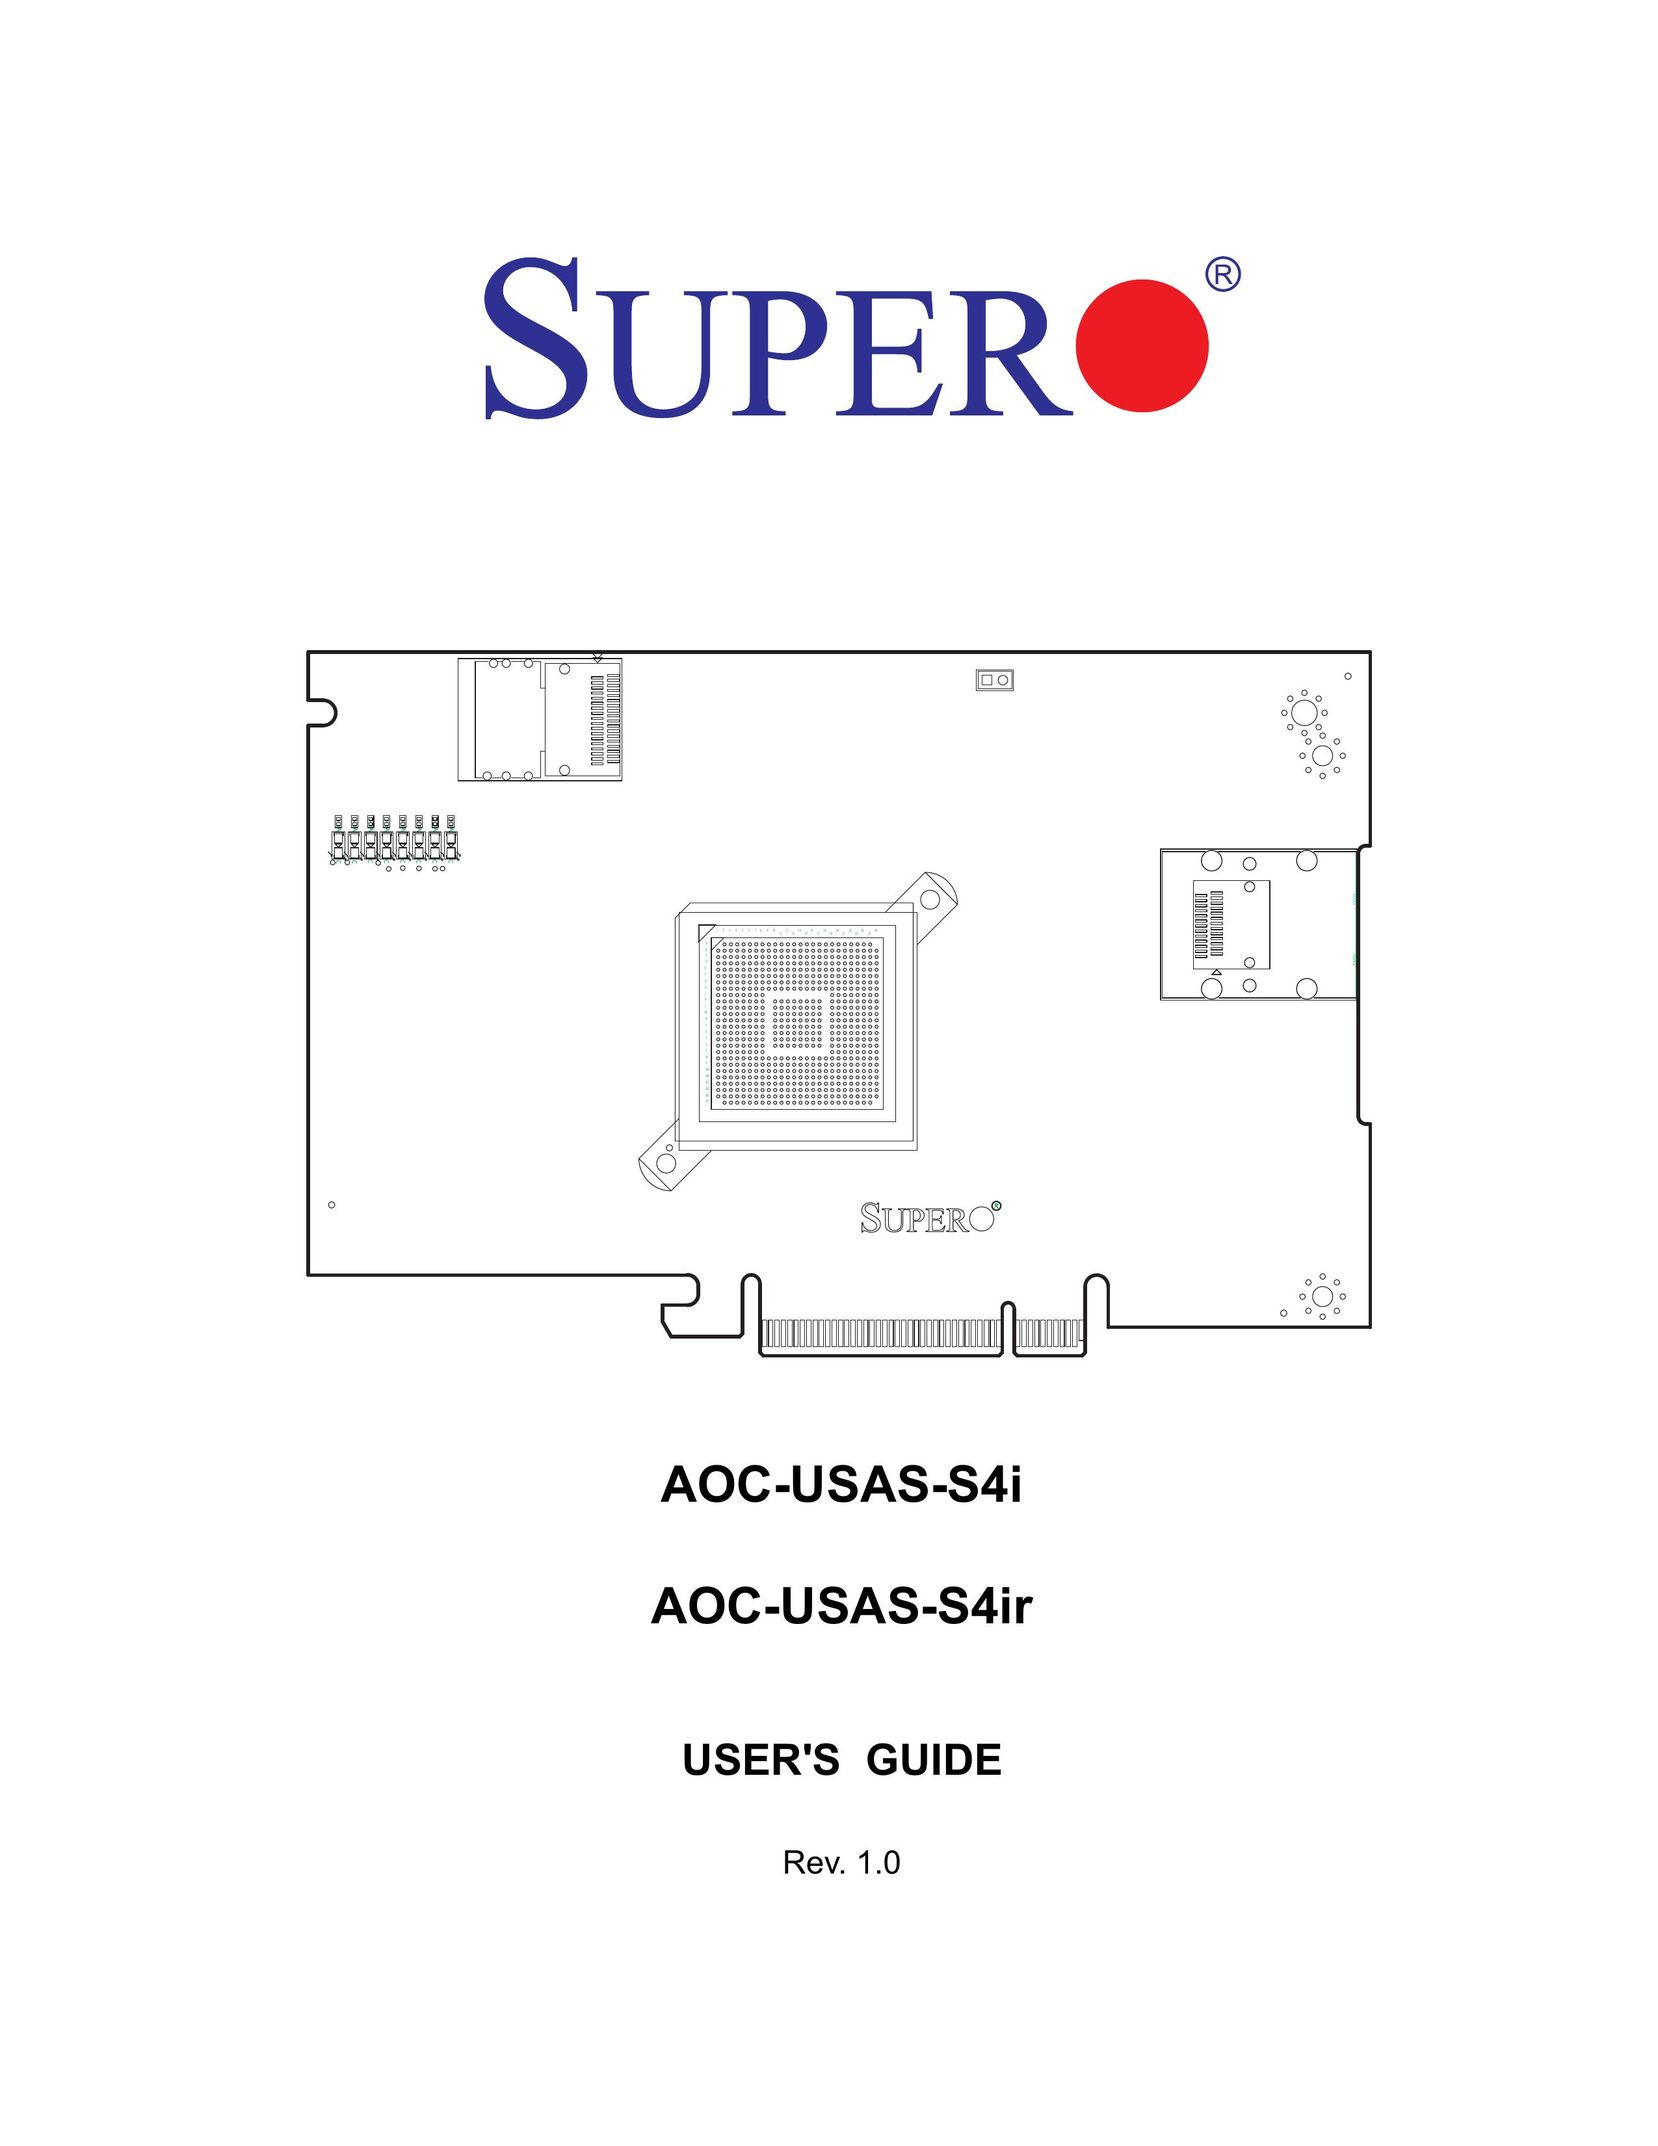 SUPER MICRO Computer AOC-USAS-S4IR Computer Hardware User Manual